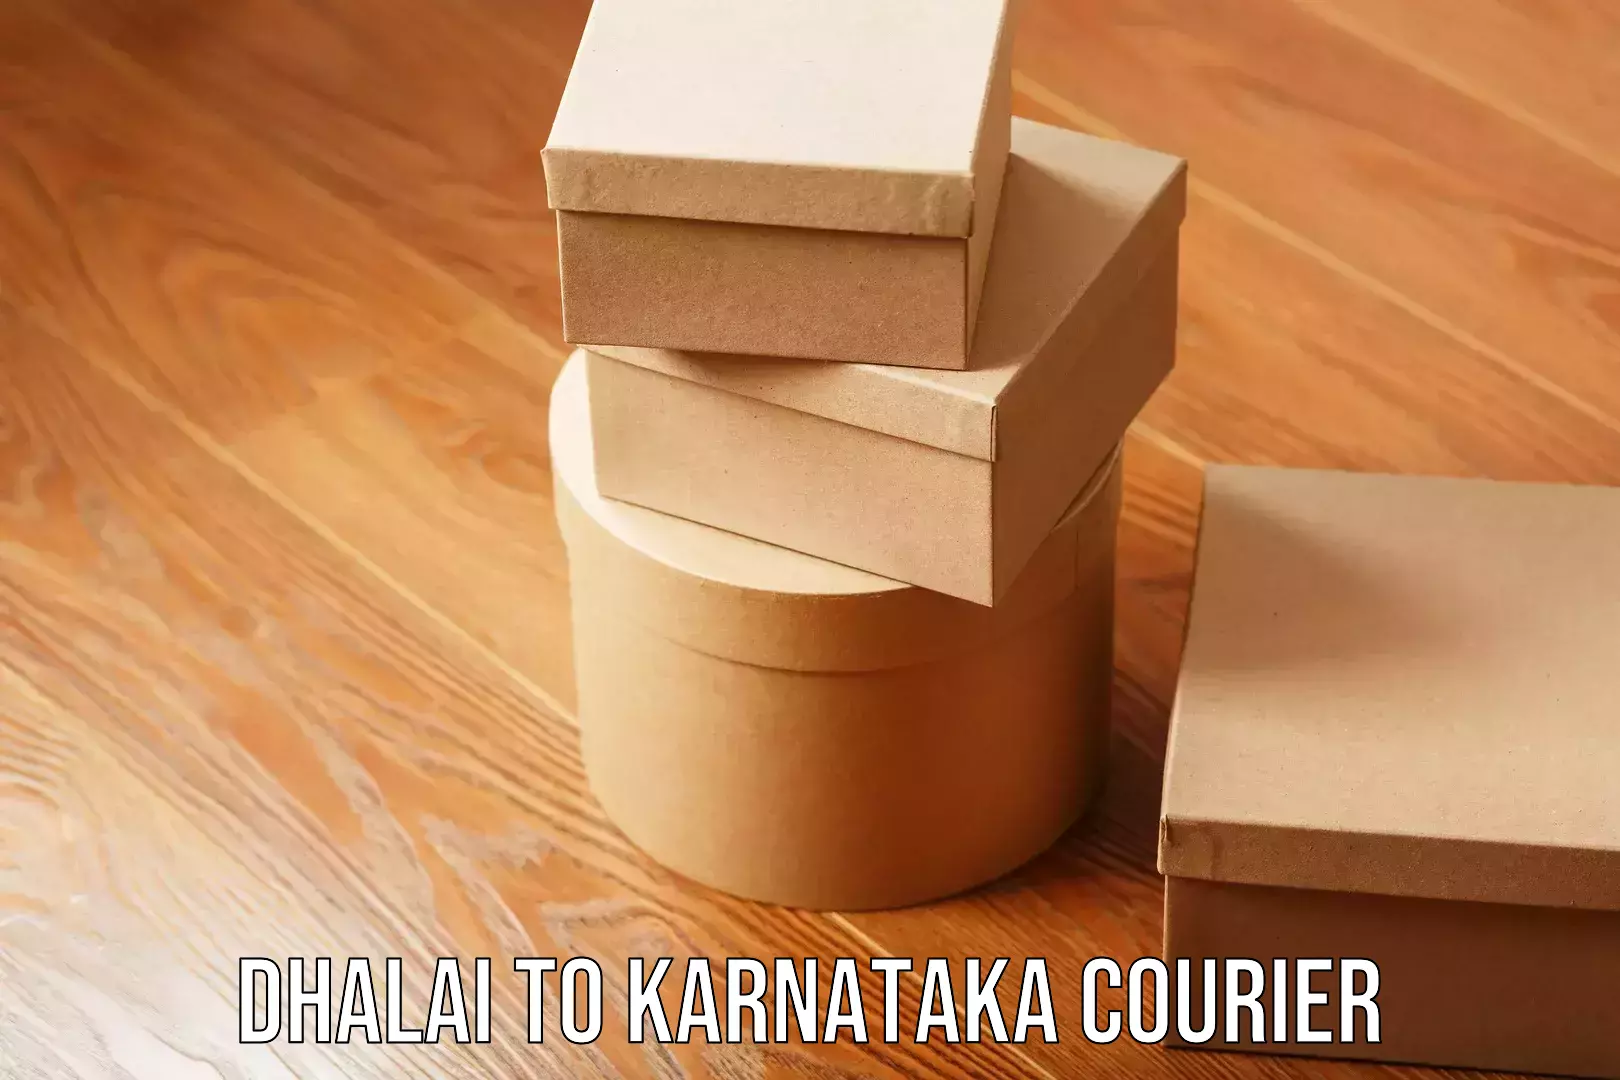 Trackable shipping service Dhalai to Karnataka